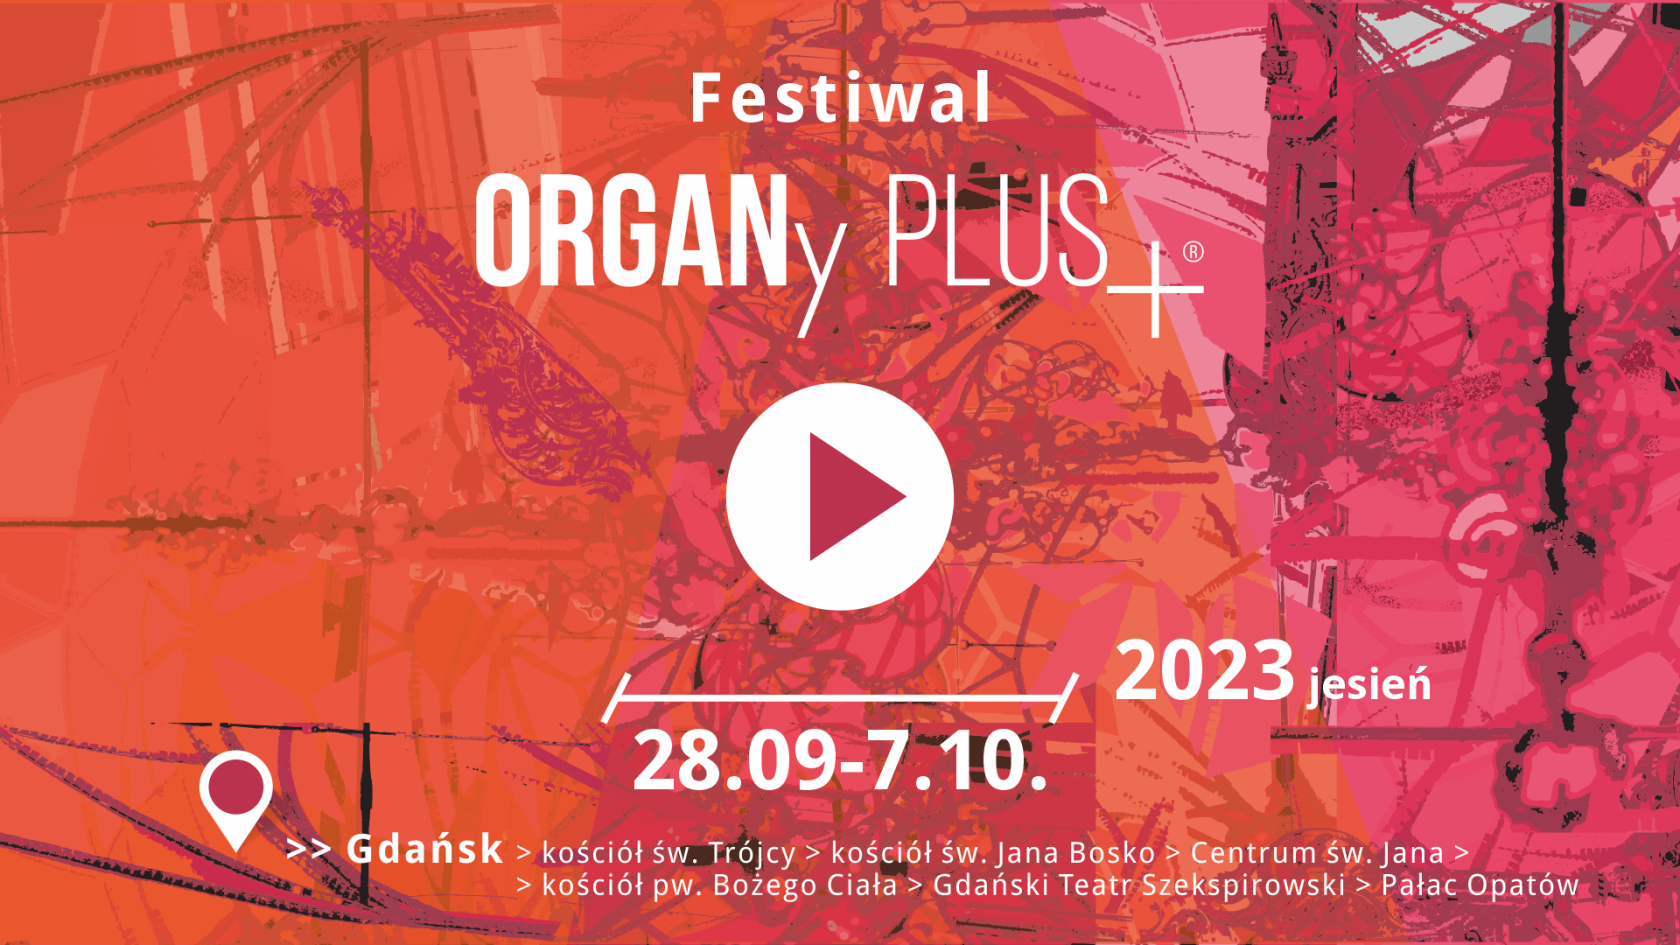 Festival ORGANy PLUS+® 2023 AUTUMN